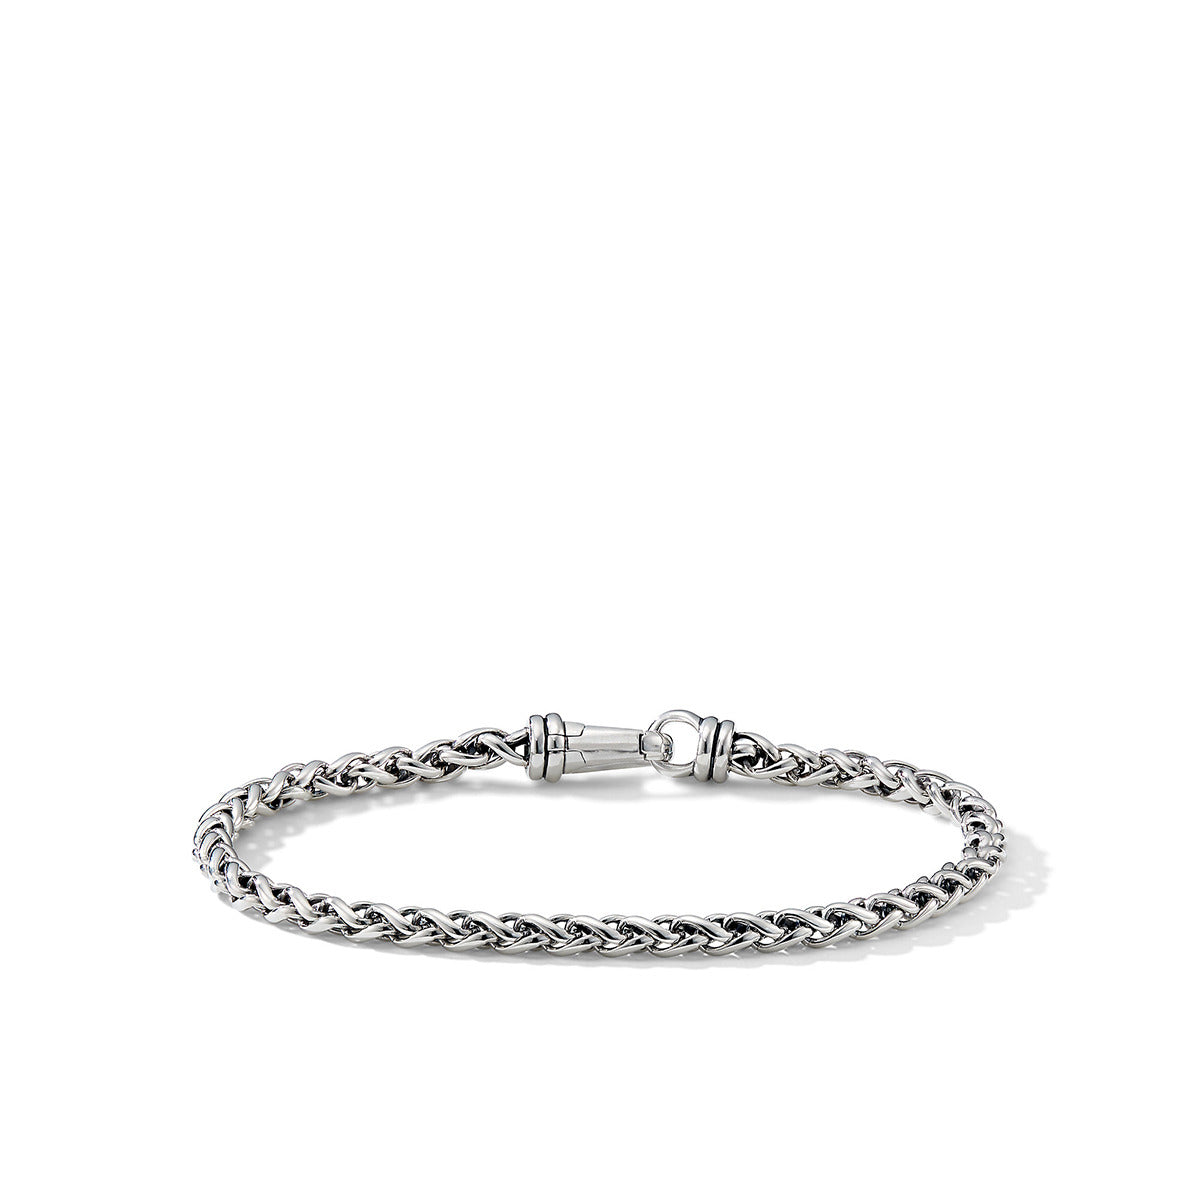 Stainless steel bracelet for men, wheat rope chain